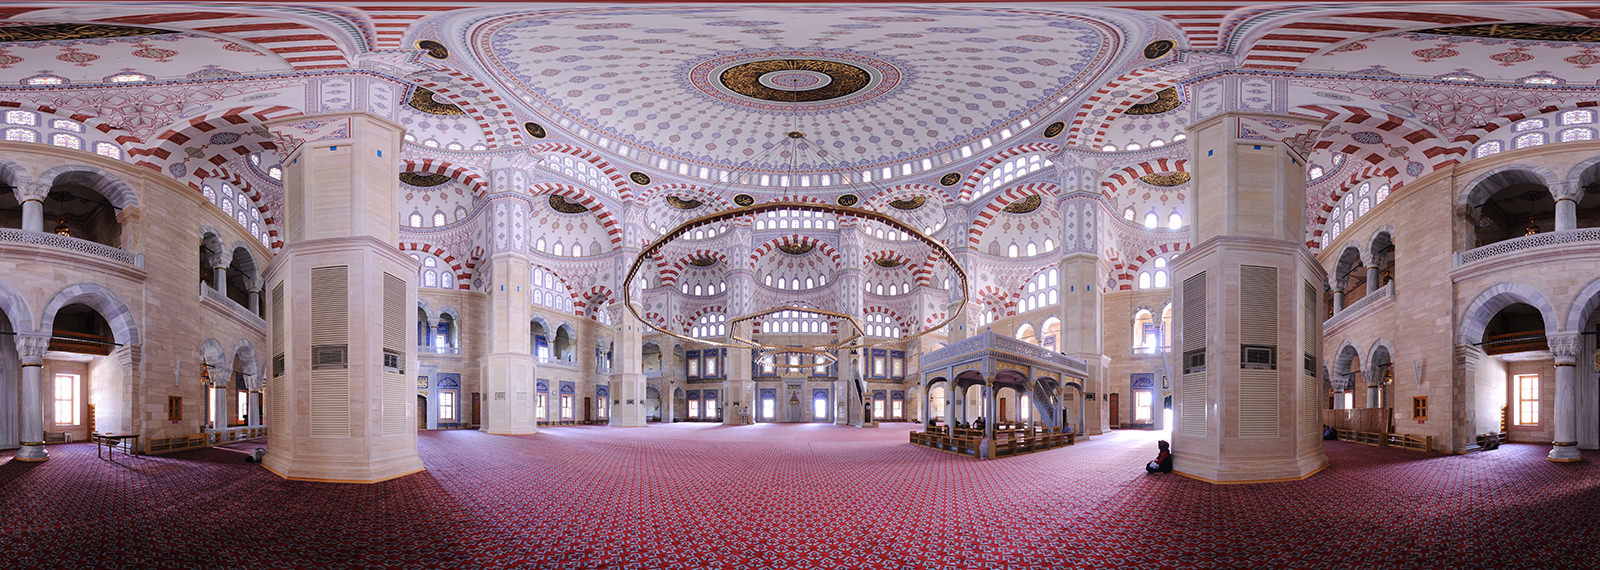 Sabanci Merkez Camii, Adana Central Mosque - Virtual tour